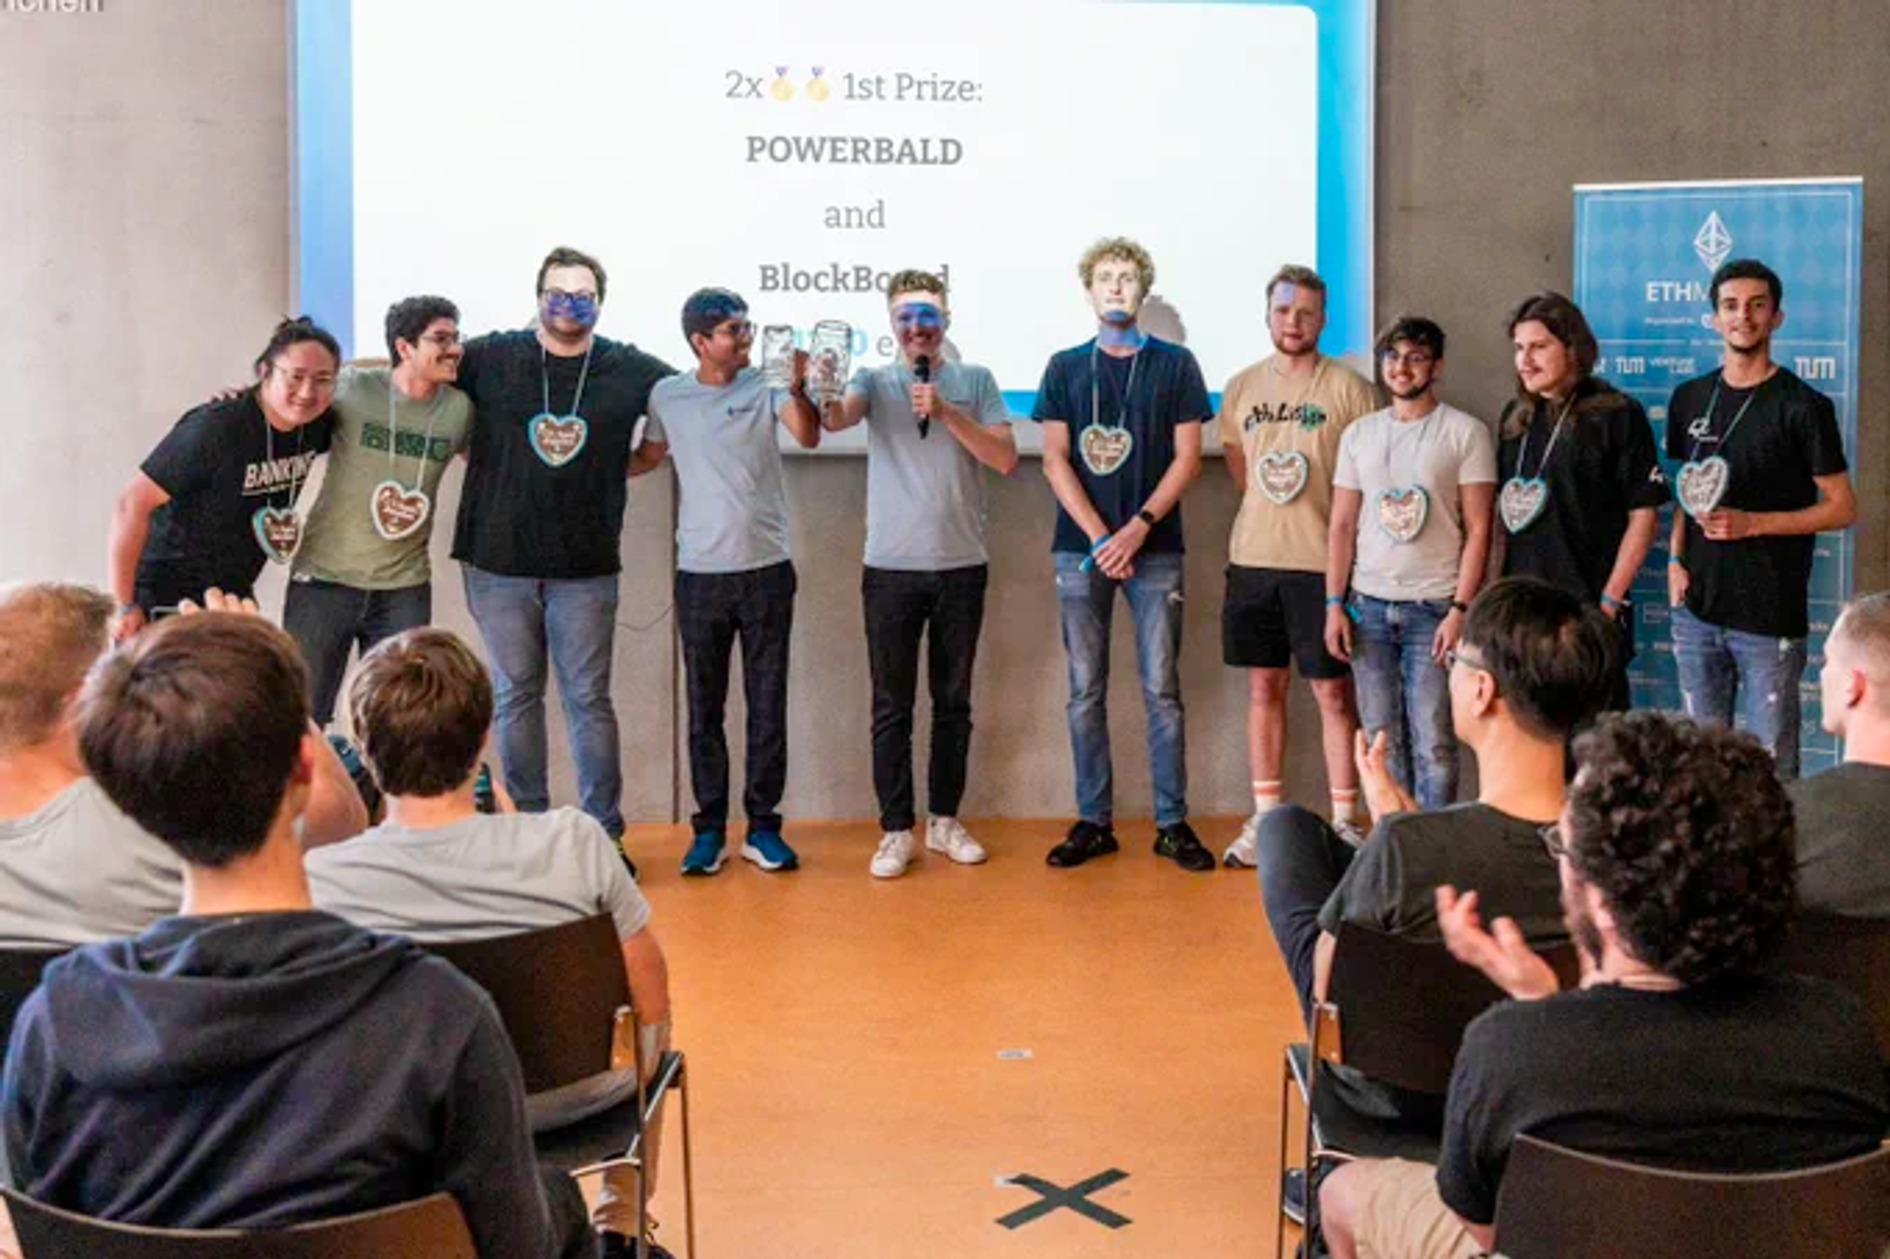 Throwback to the Biggest ETHMunich Hackathon